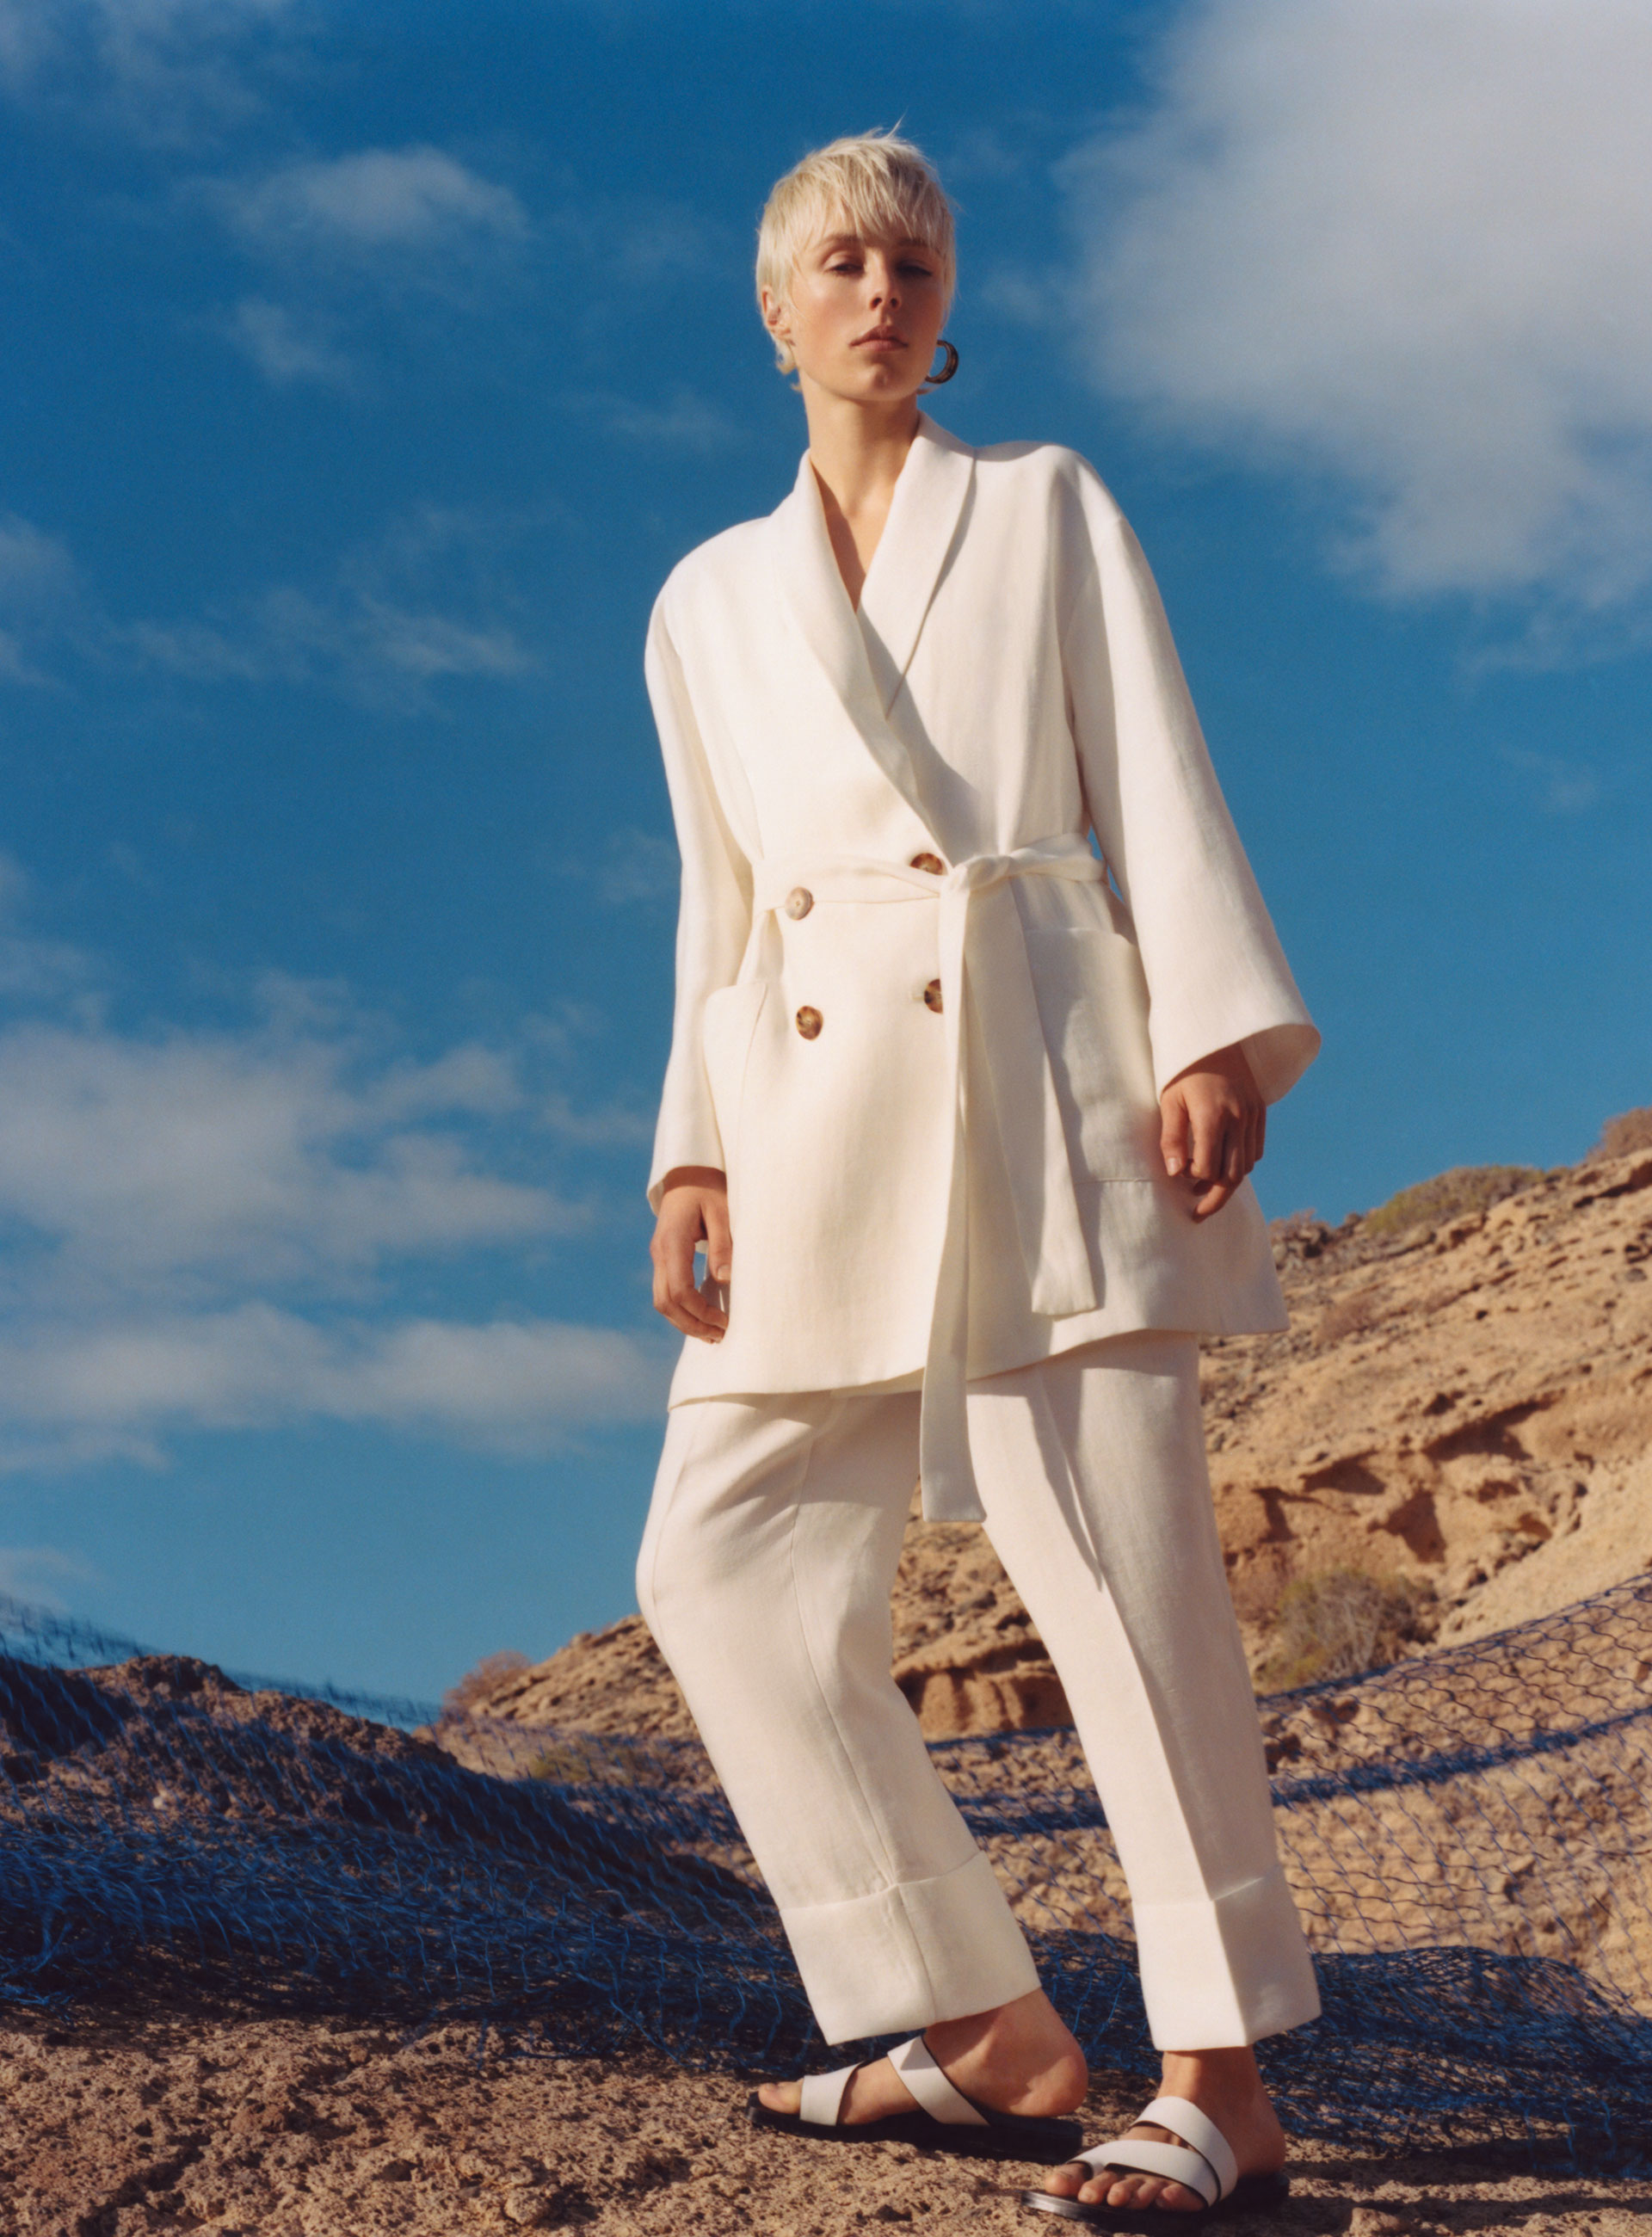 Zara Woman Editorial – Spring/Summer 